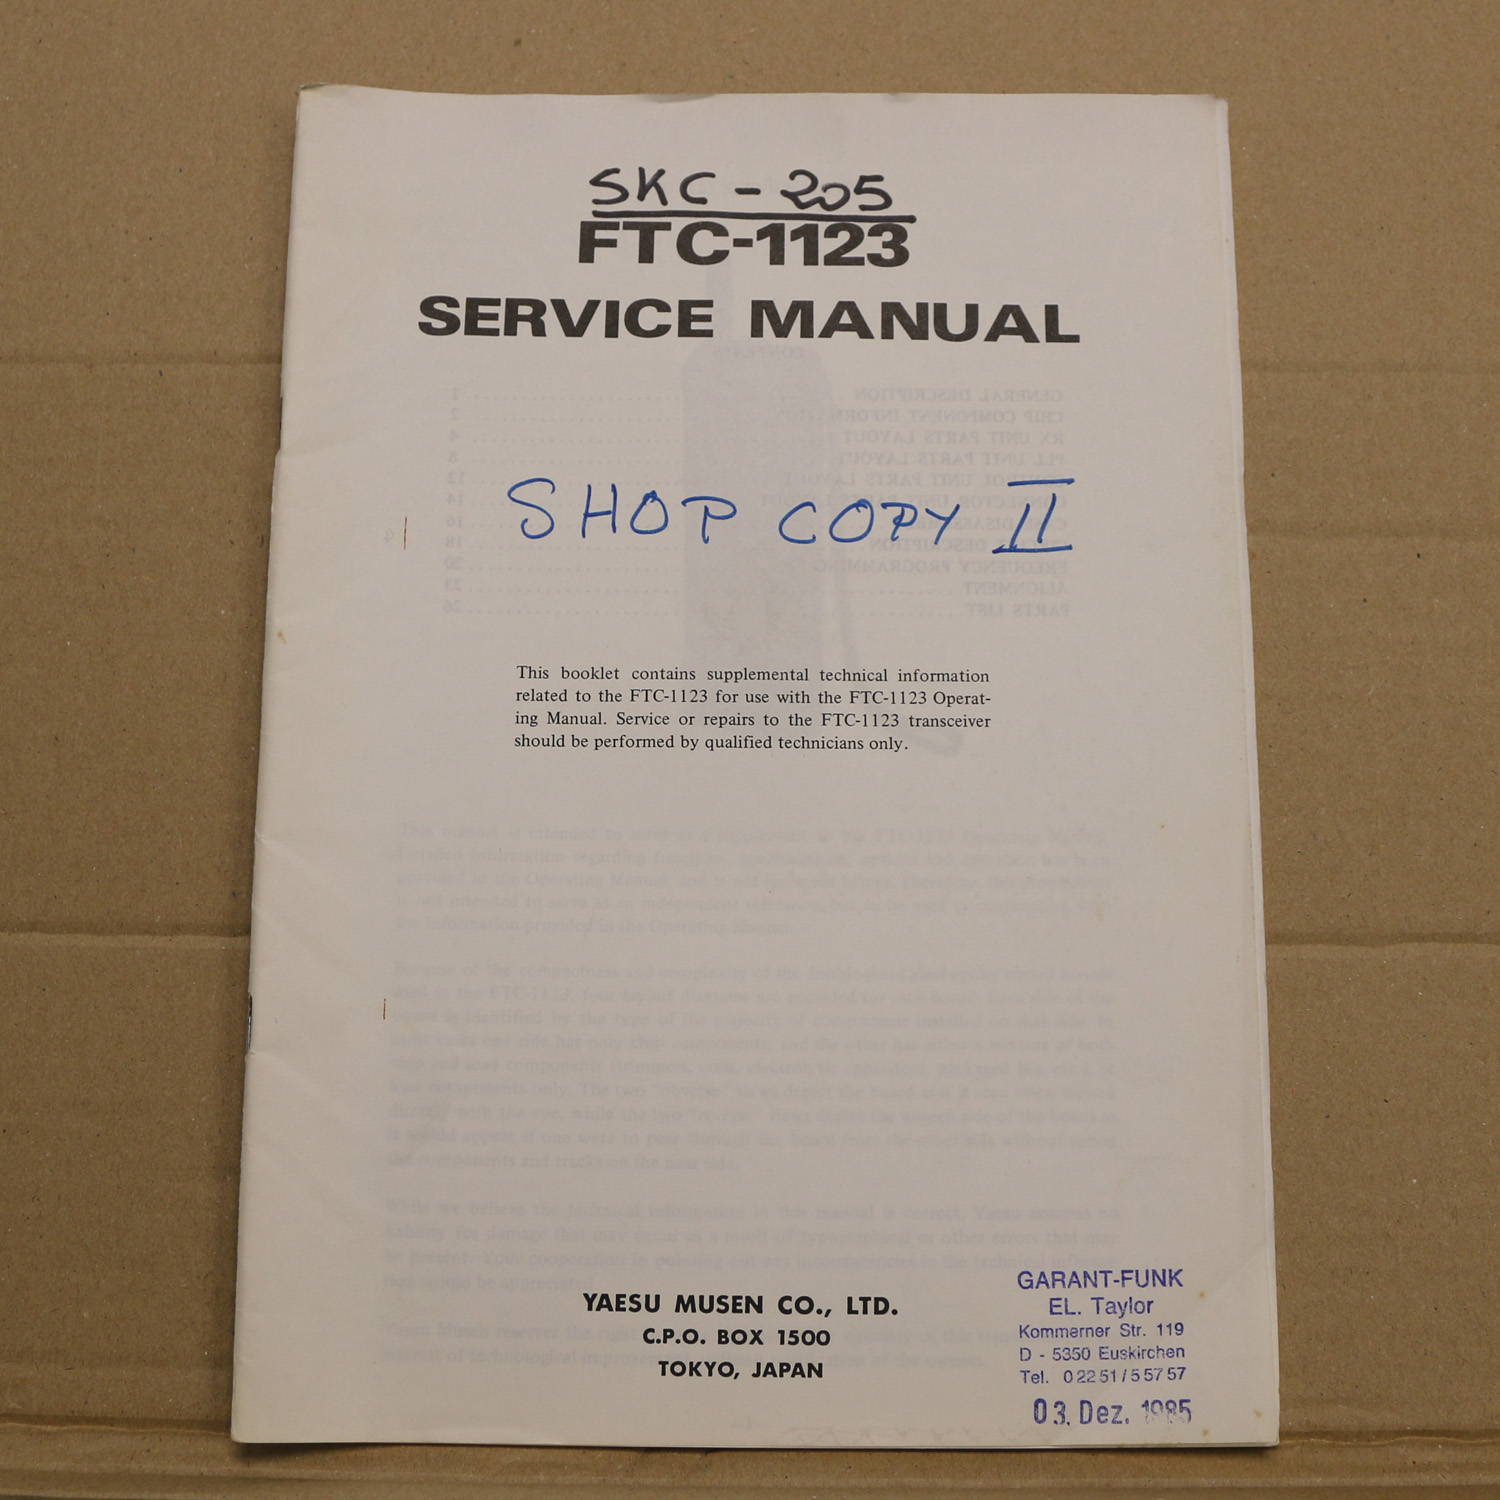 Yaesu FTC-1123 Service Manual